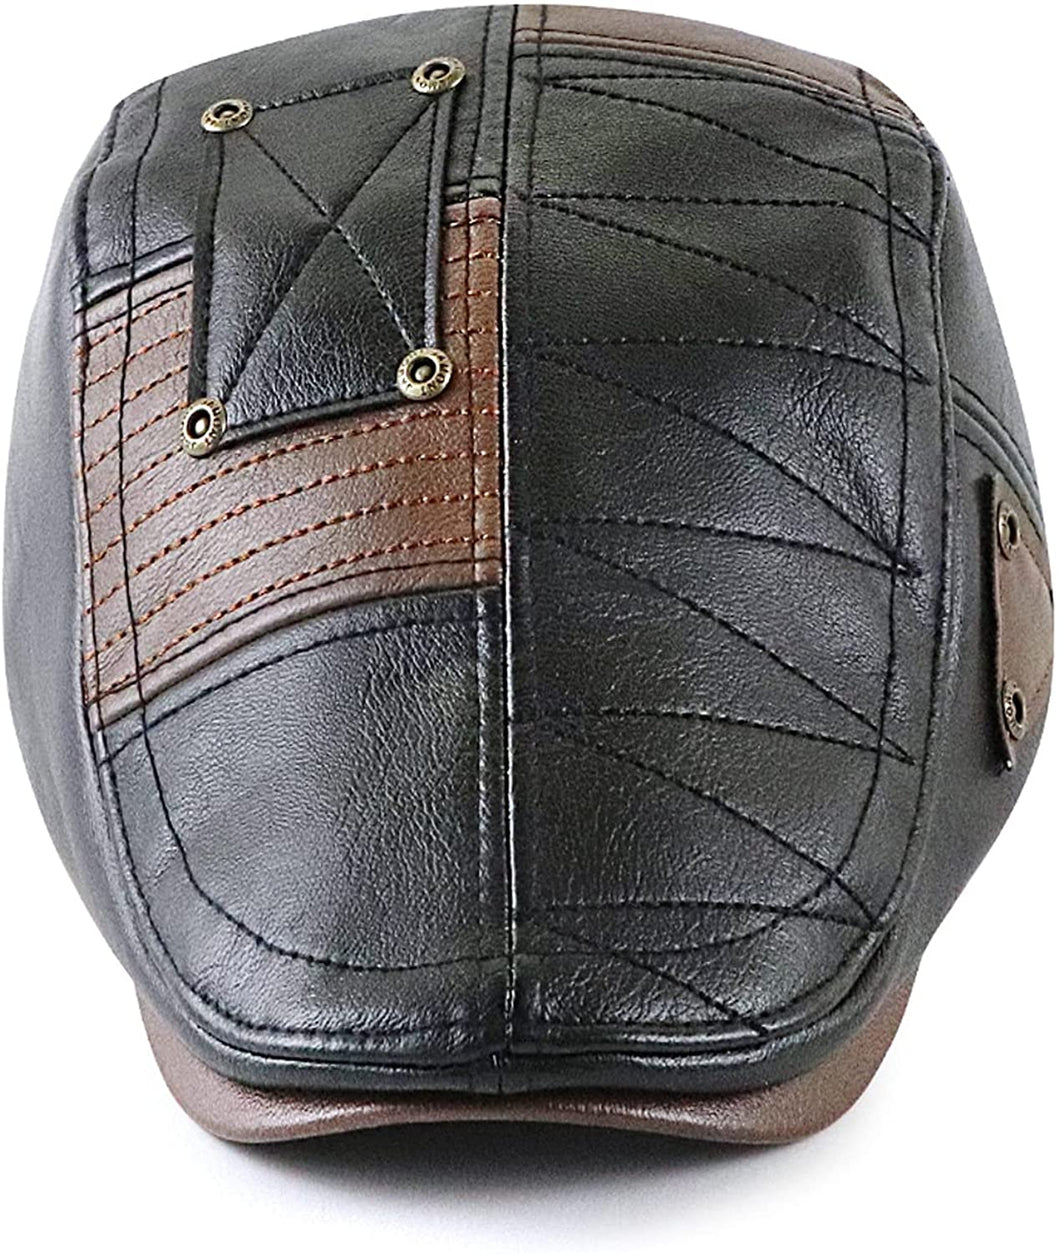 Newsboy Hat Black PU Leather Classic Flat Cap